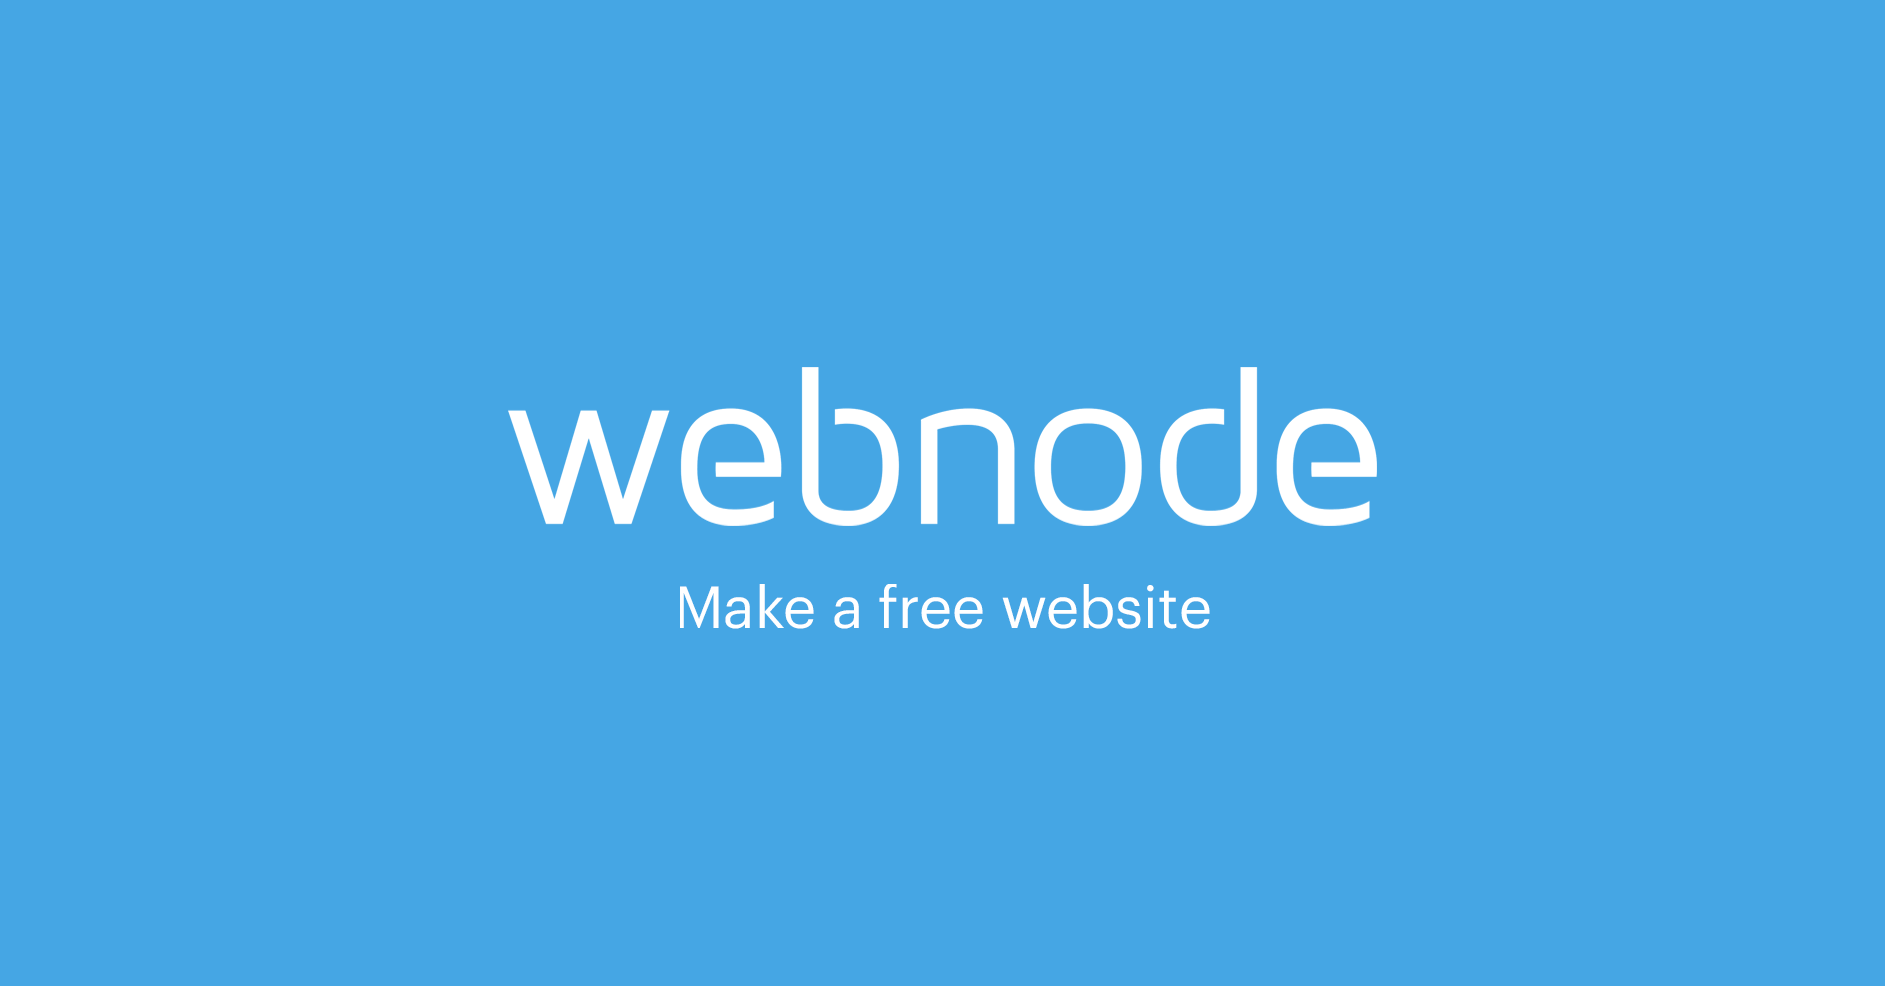 Create a free website easily | Free website builder - Webnode